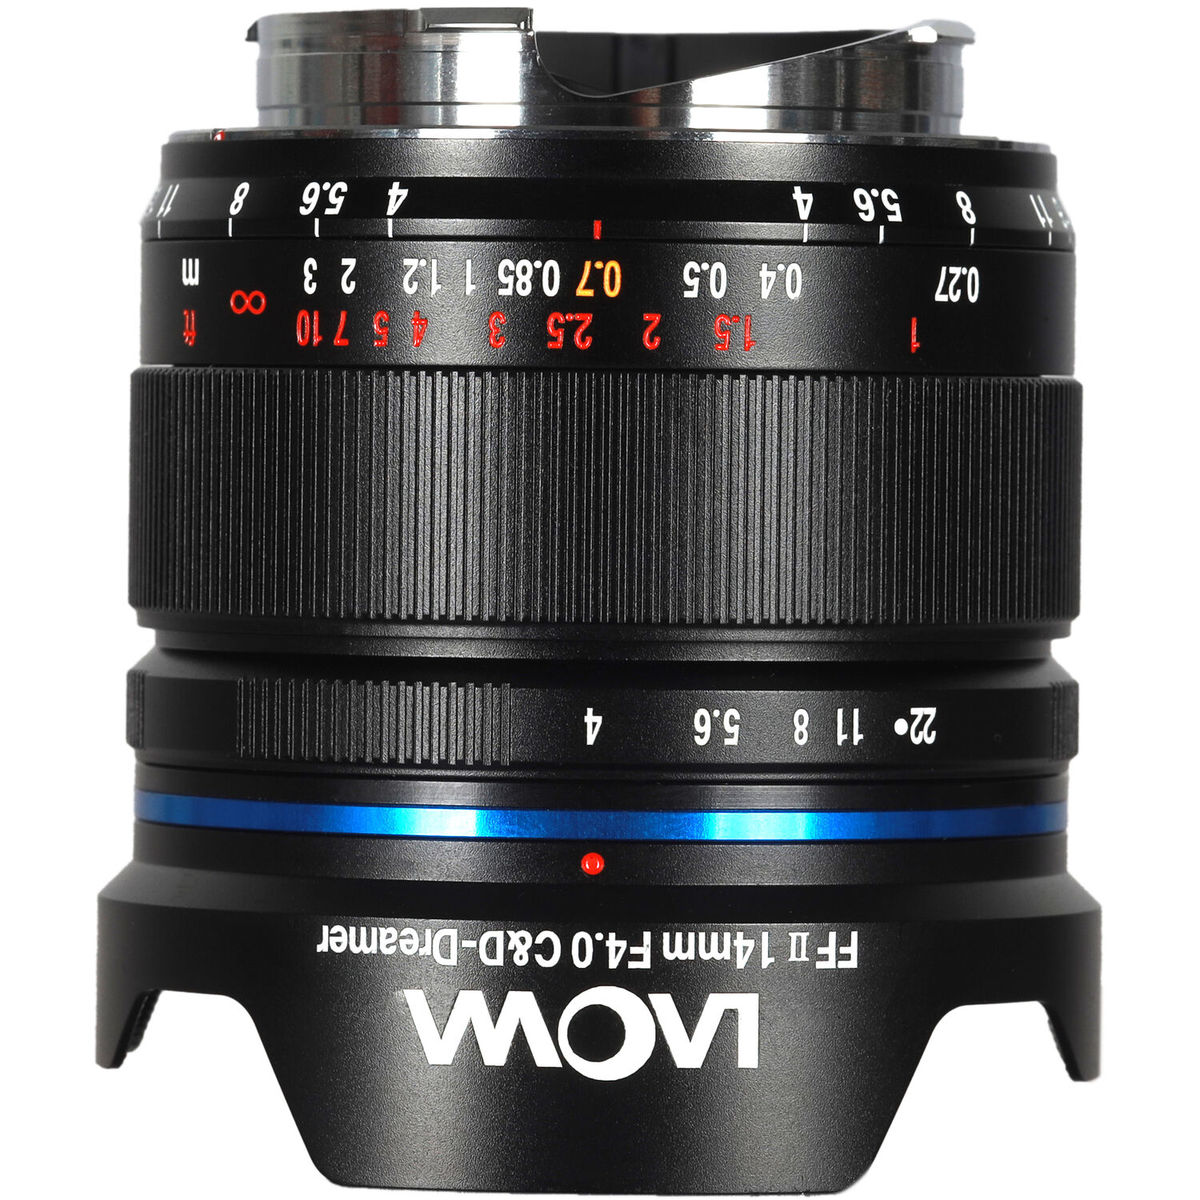 2. Laowa Lens 14mm f/4 FF RL Zero-D (Leica M) Black